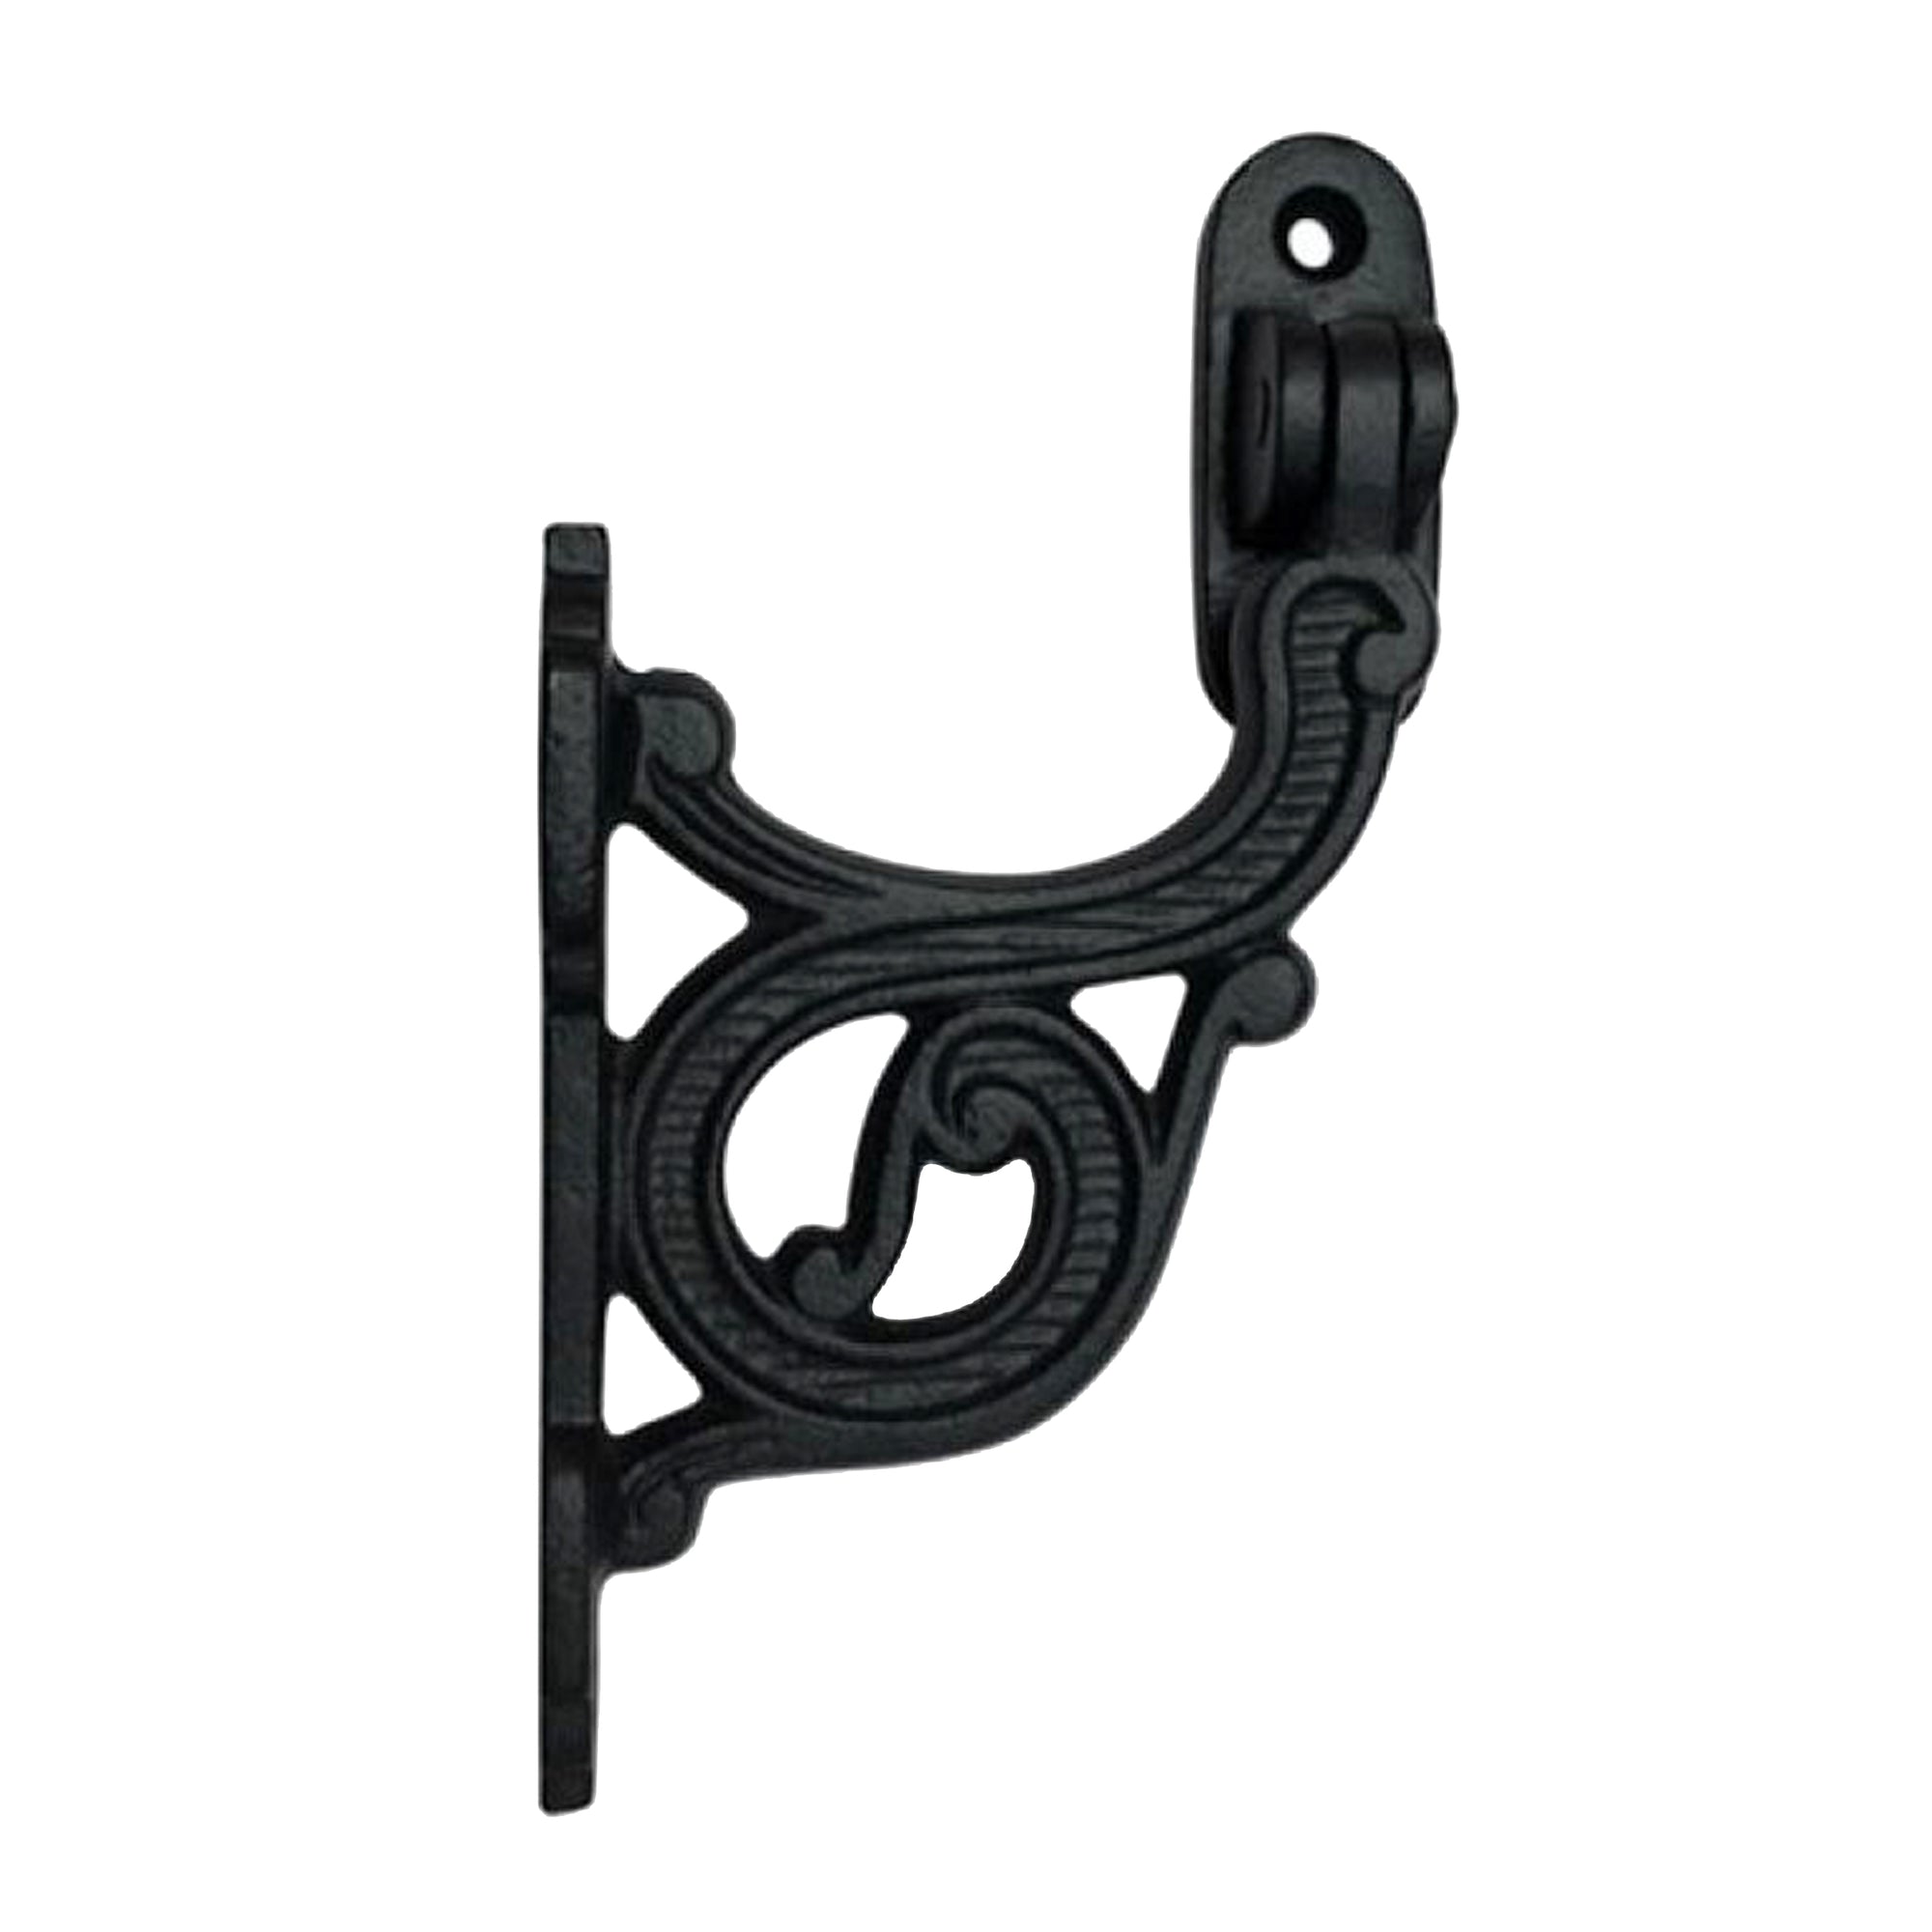 Handrail Brackets – Heavy Duty Brackets for Stairway Support – Easy Installation Hardware Railing Bracket - Black Powder Coated